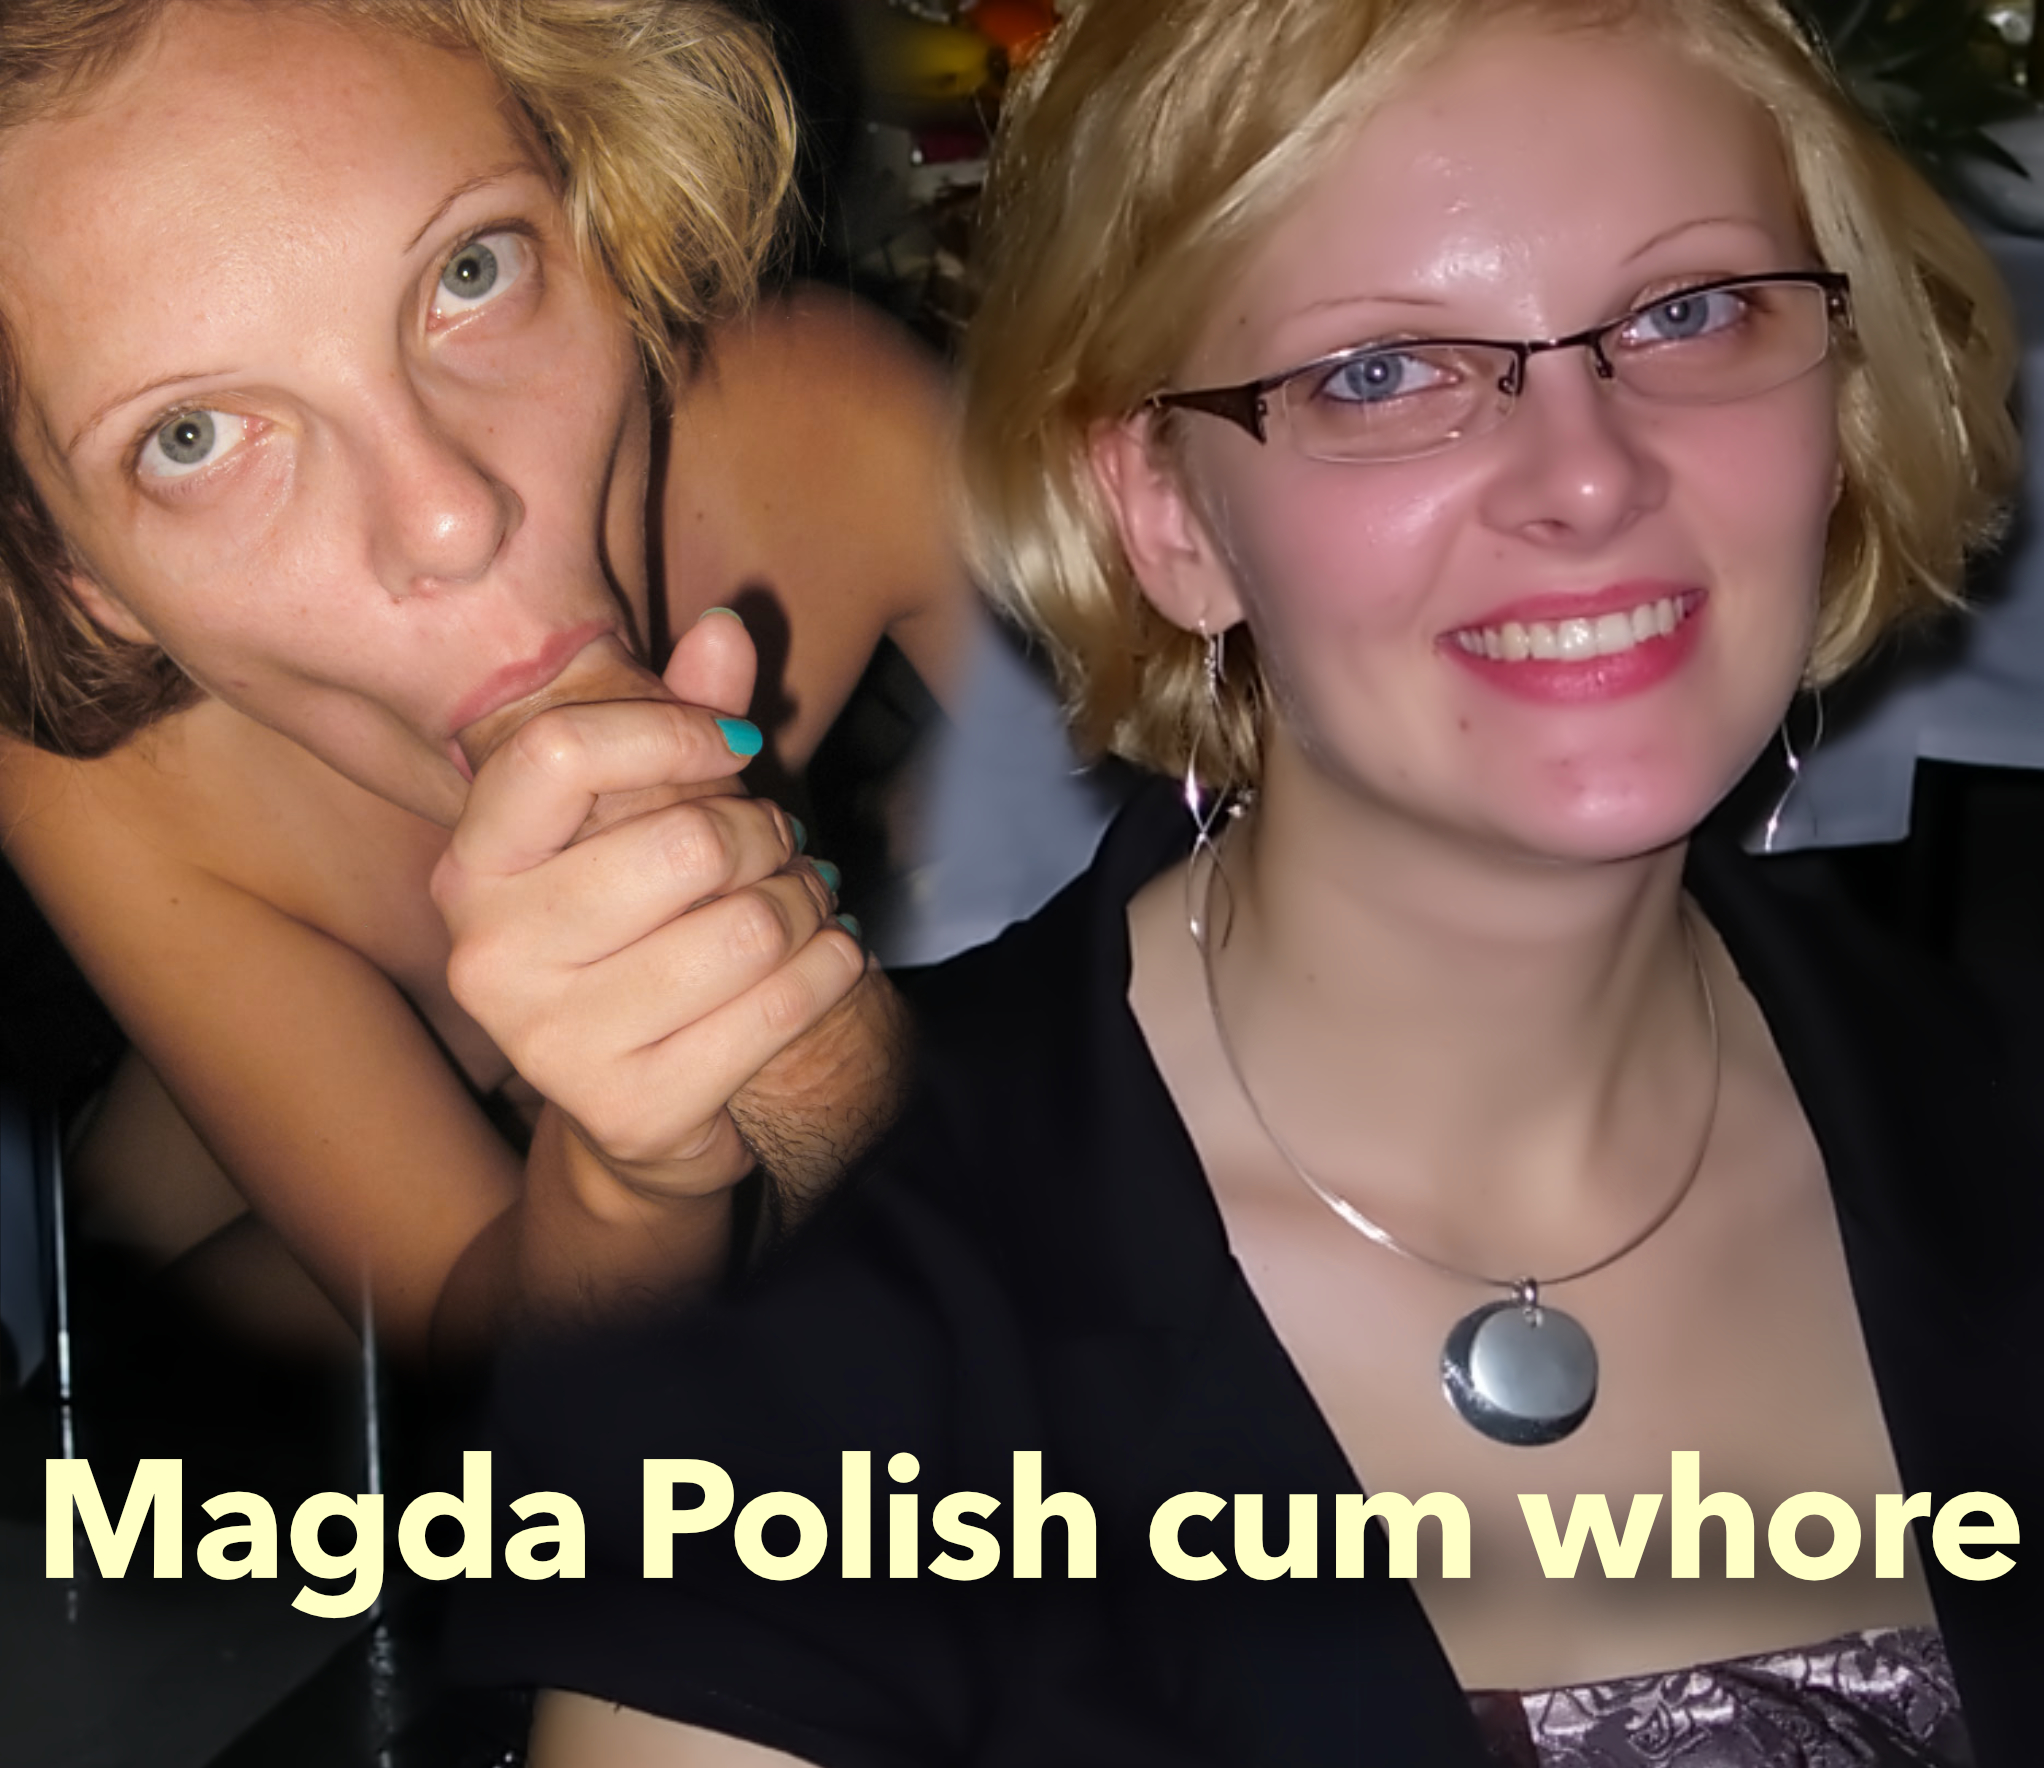 Magda Polish web whore facializex and fucked pic